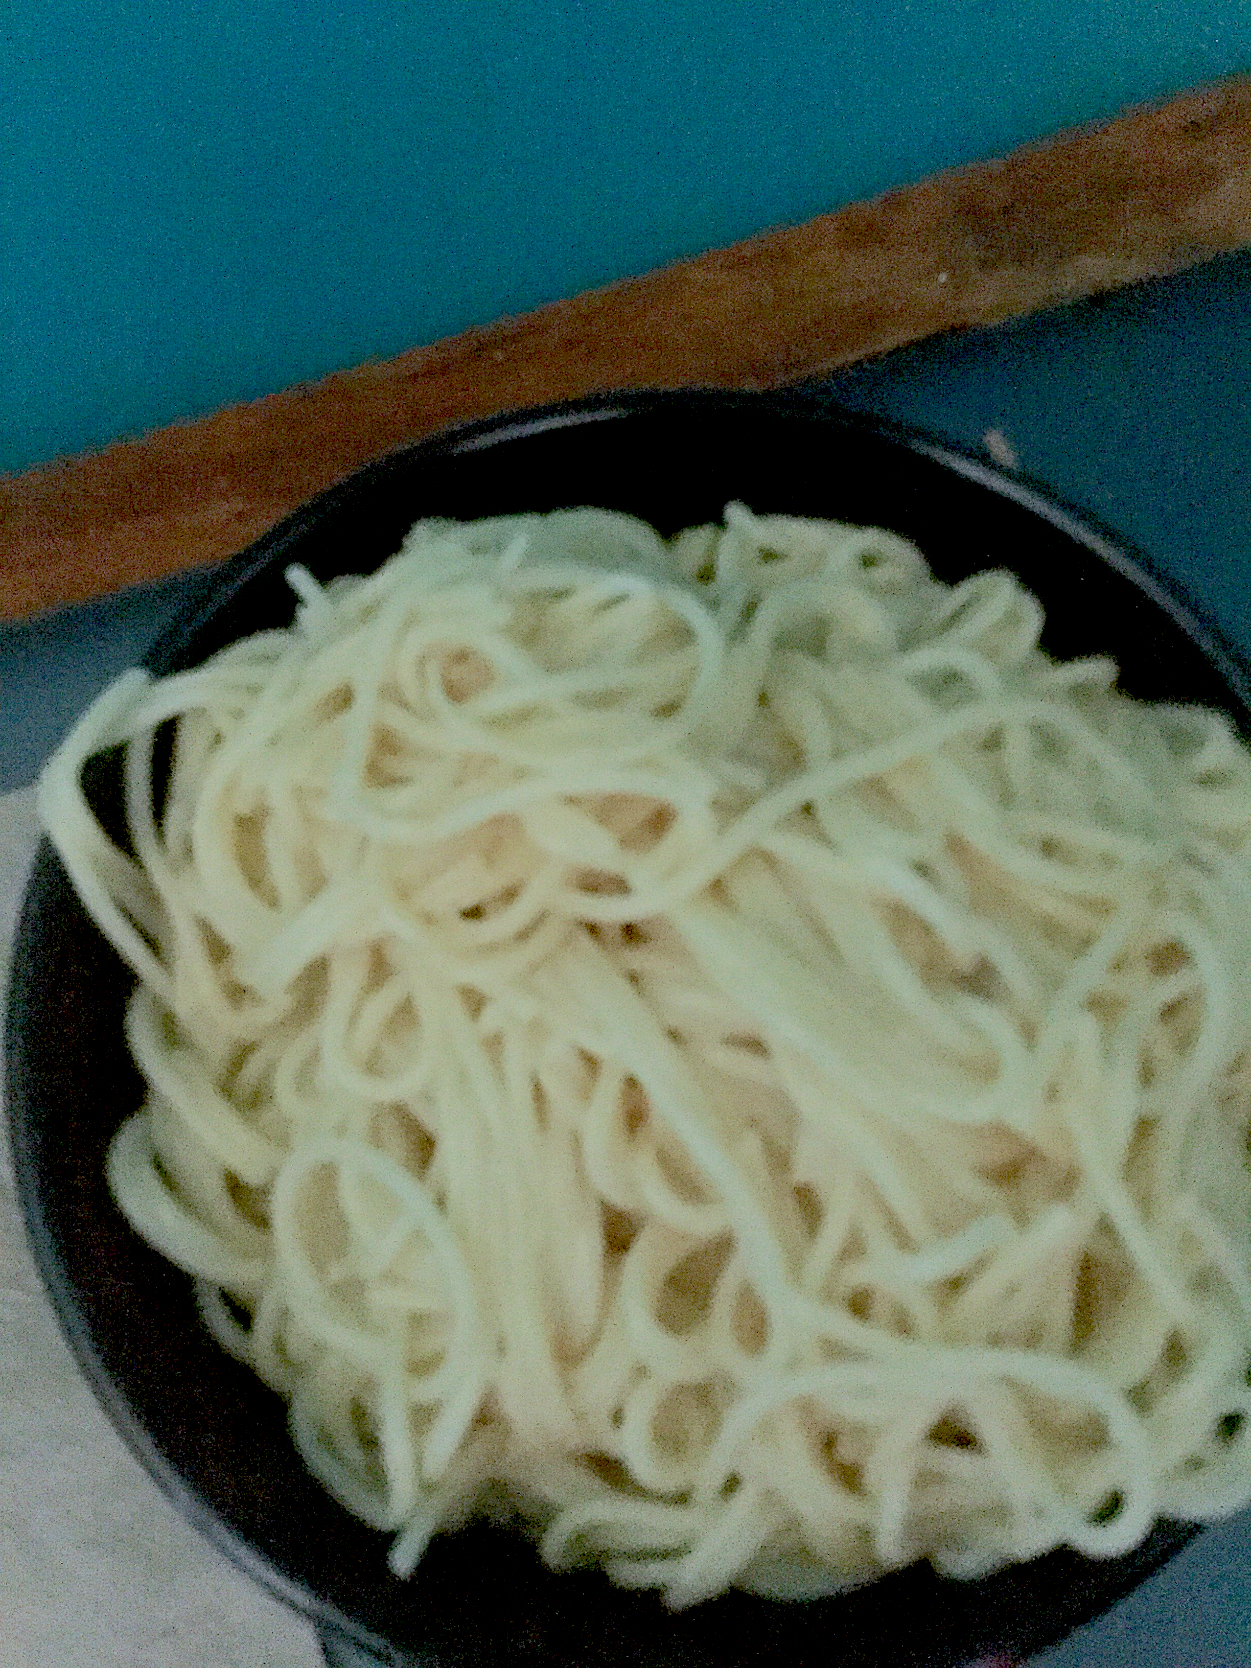 Garlic spaghetti with cheese whiz